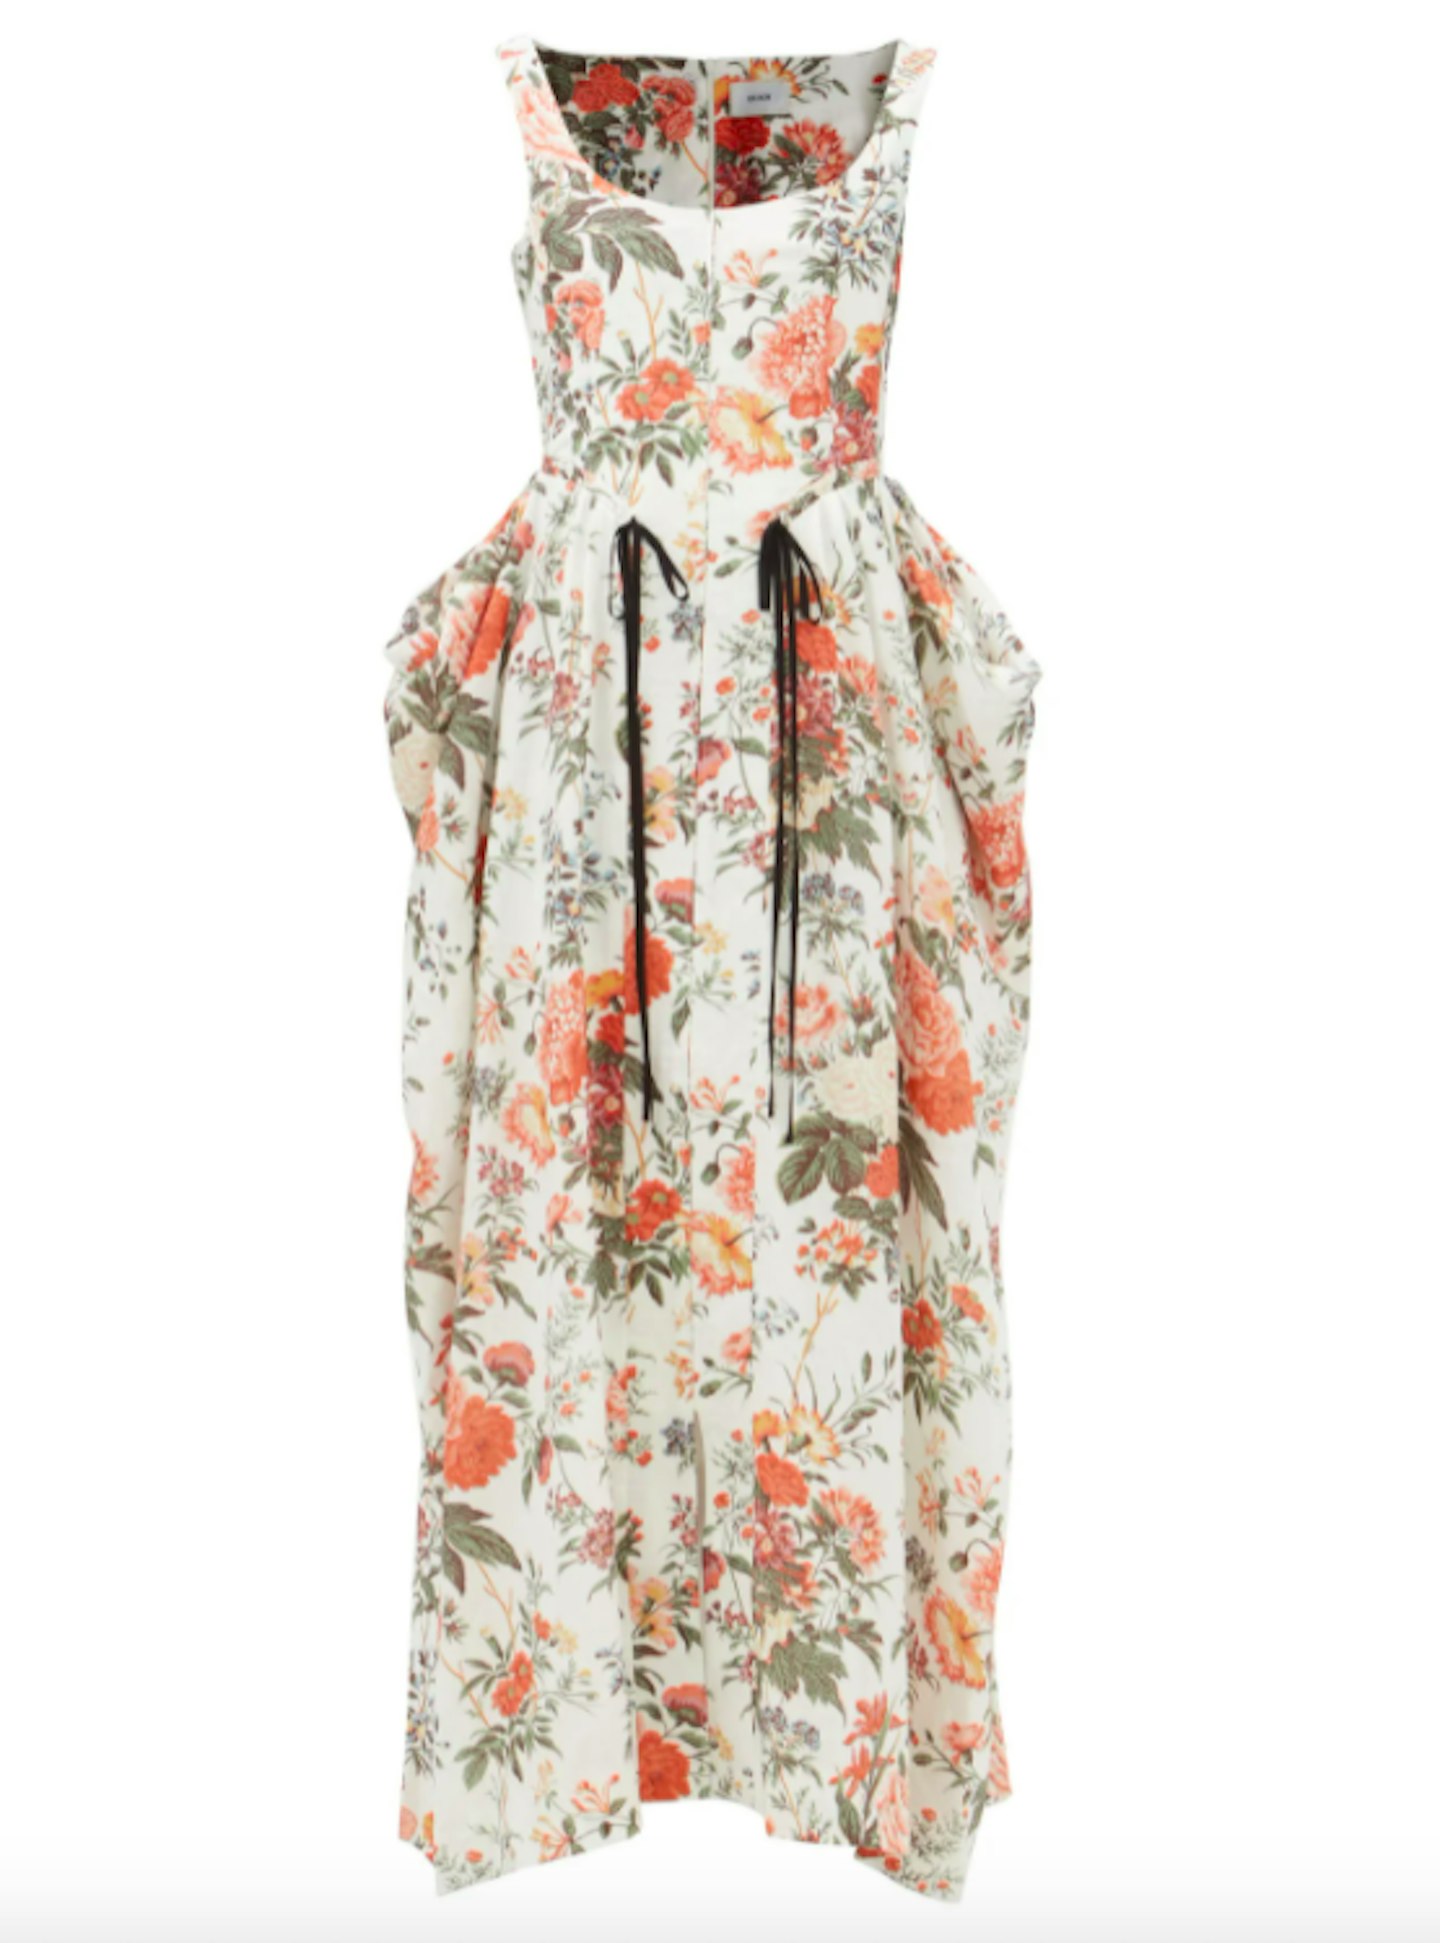 Erdem, Roanna Floral-Print Linen Bodice Dress, £1,995